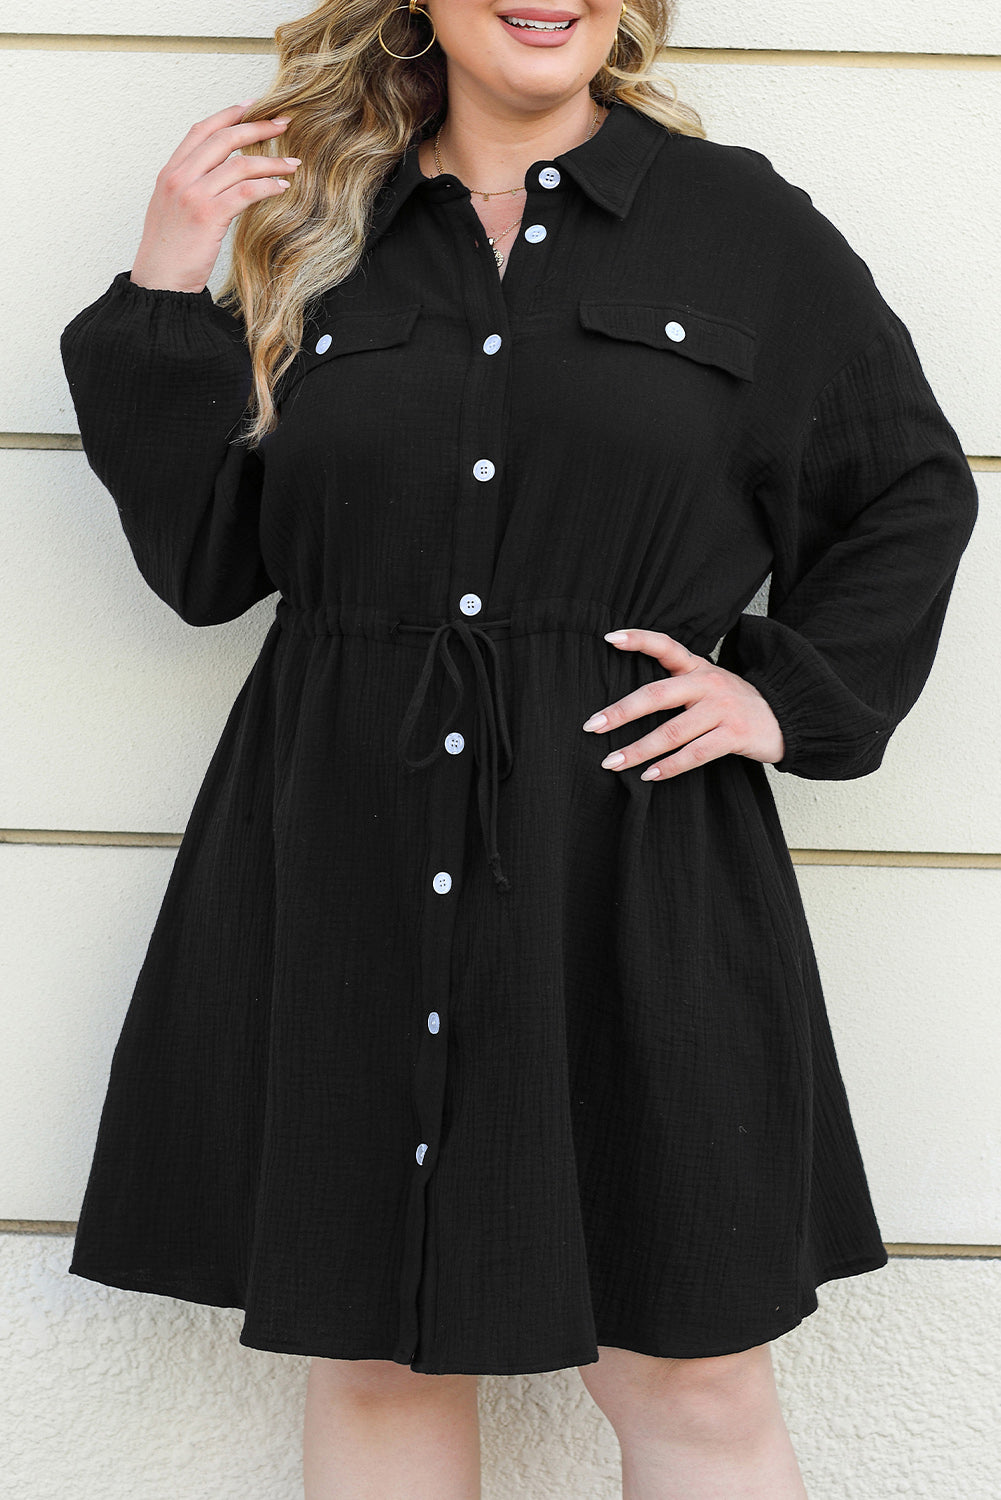 Black Plus Size Textured Drawstring Button up Shirt Dress